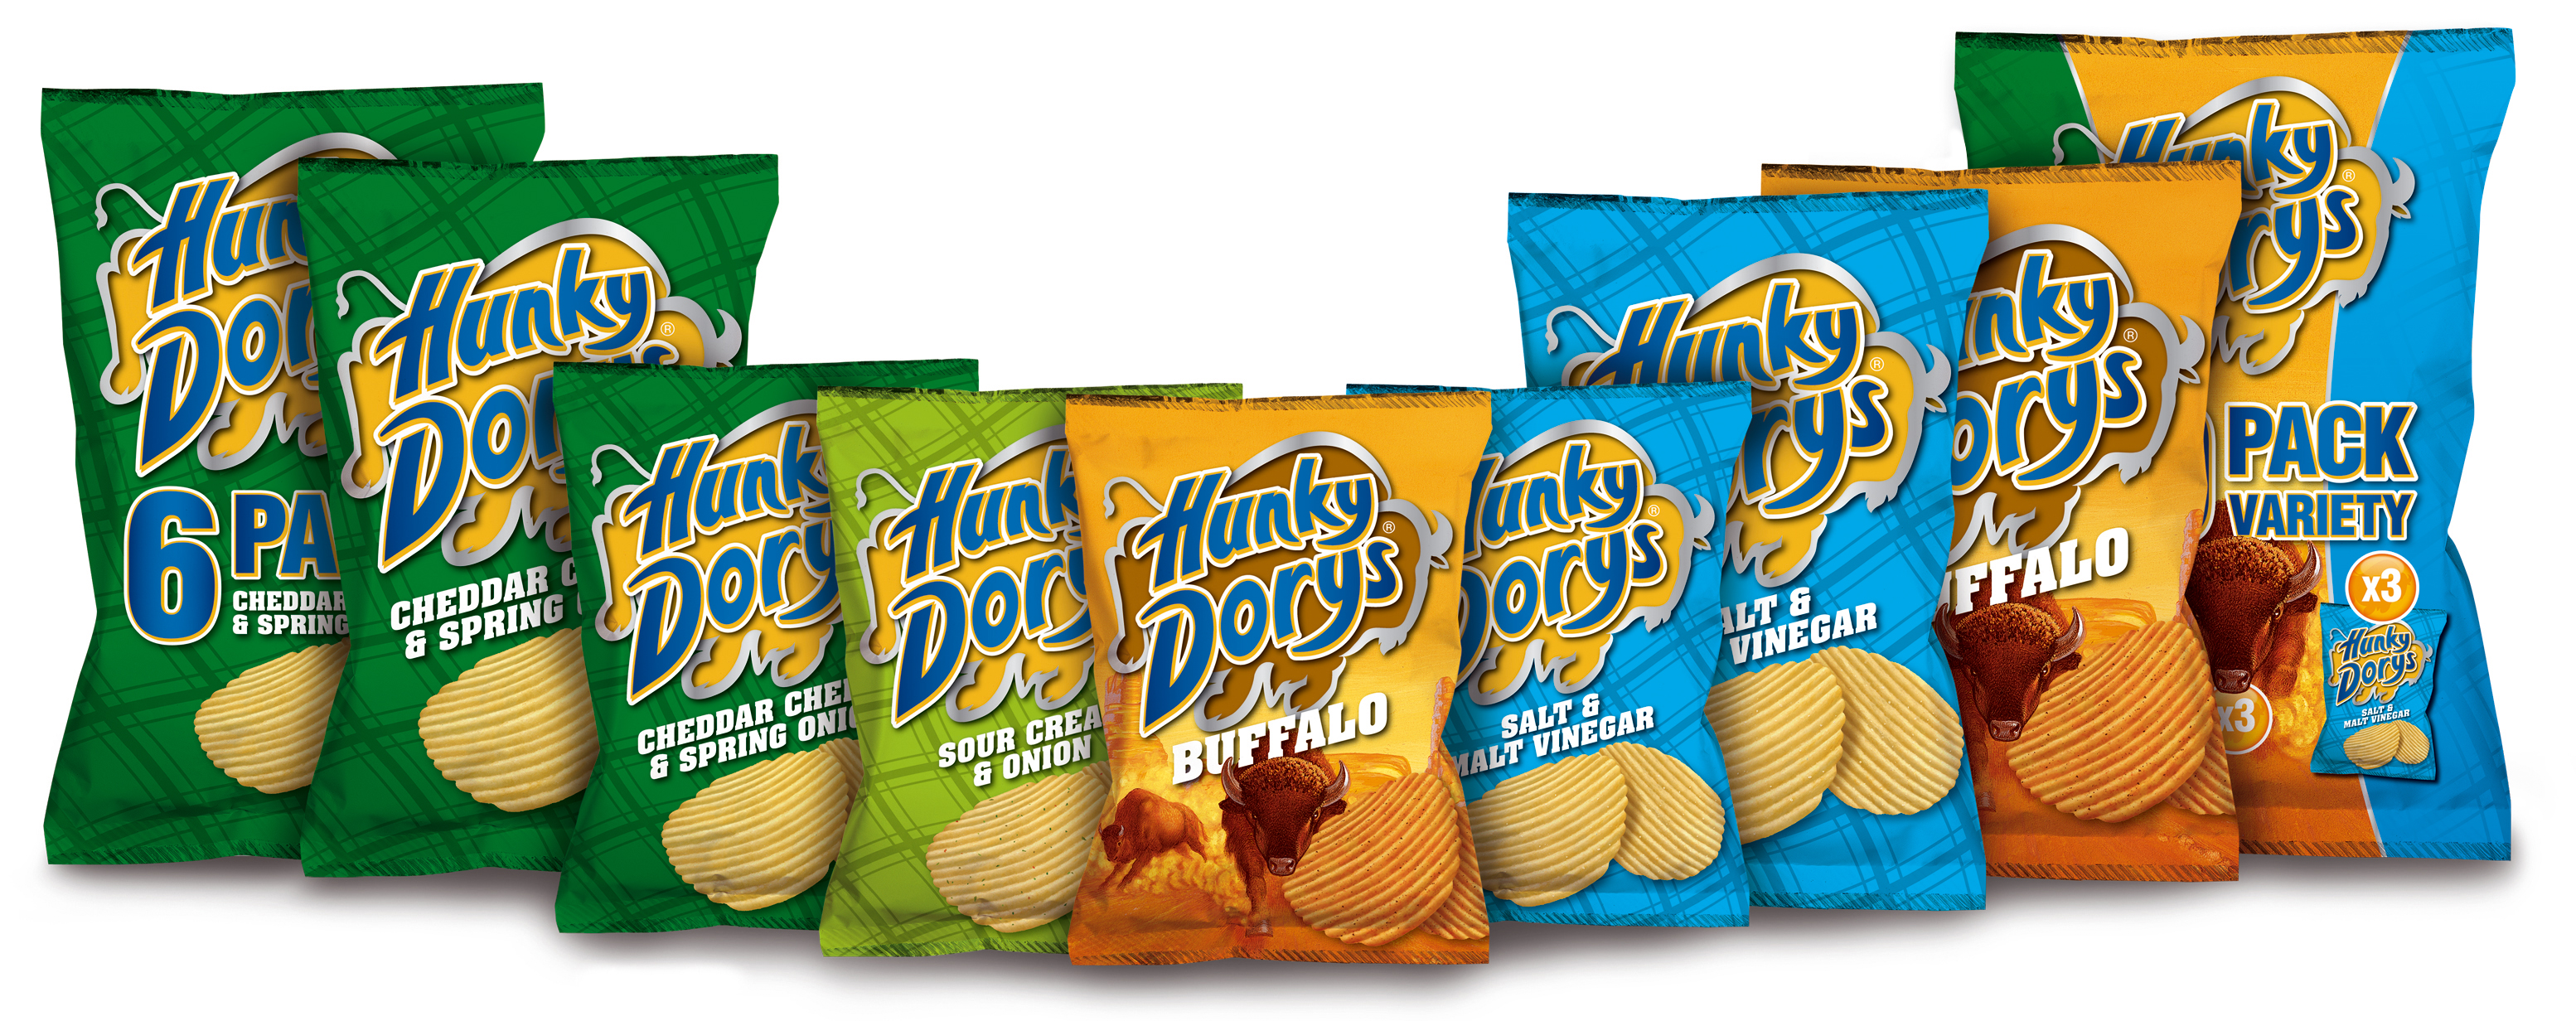 Hunky Dorys is Ireland’s market leader in sharing crisps